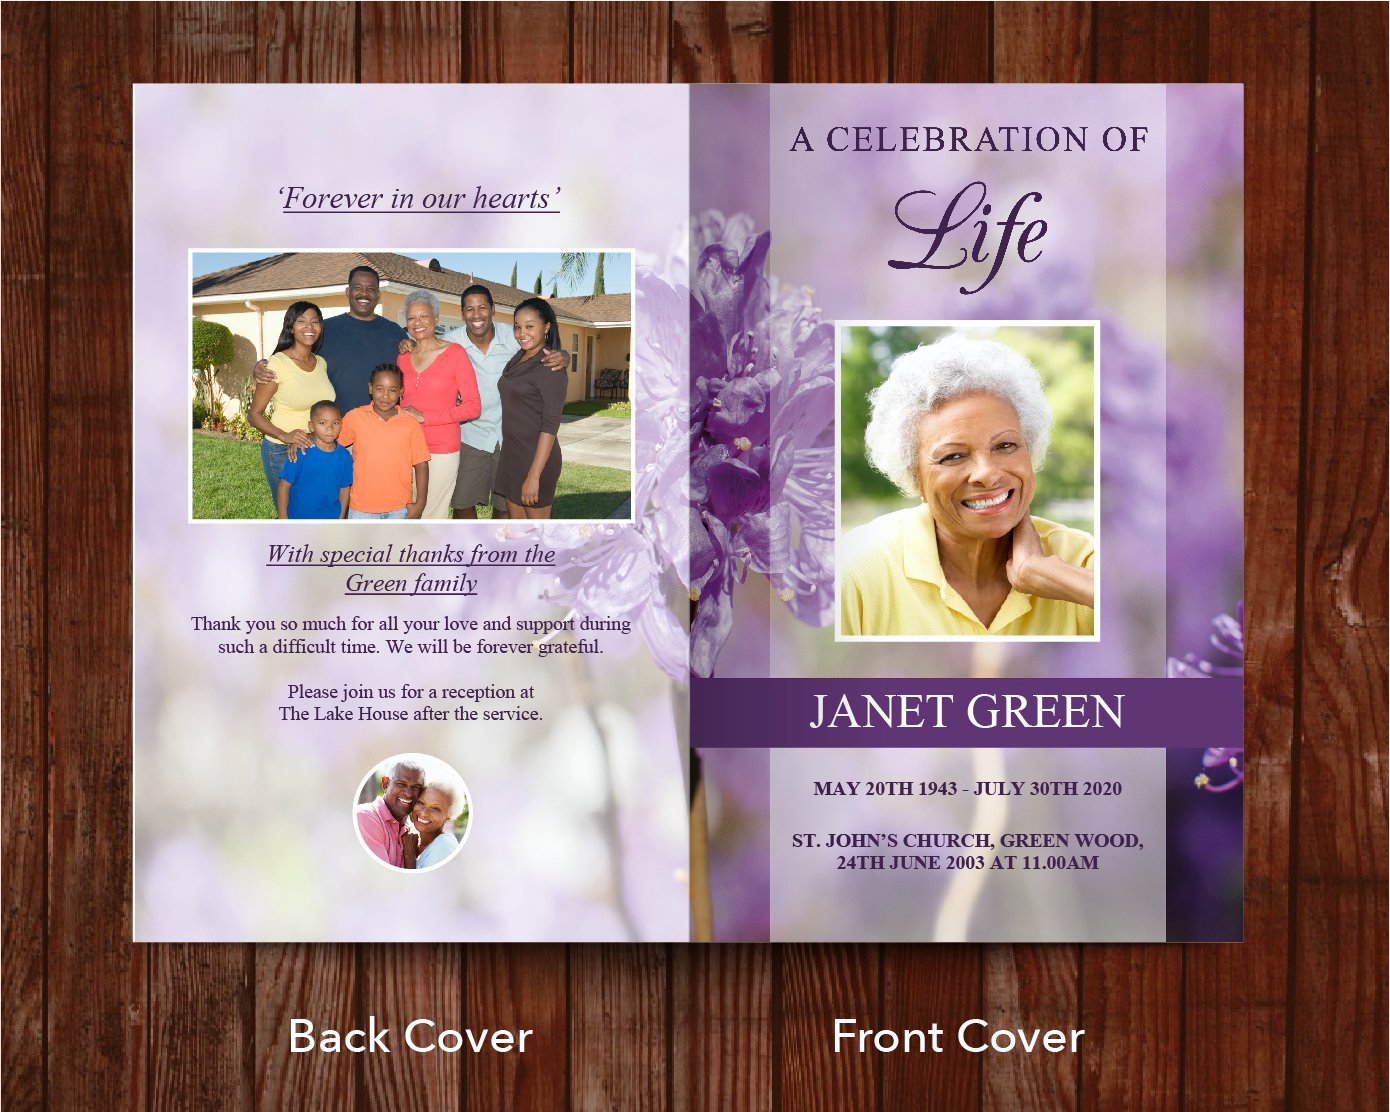 8 Page Purple Flowers Funeral Program Template